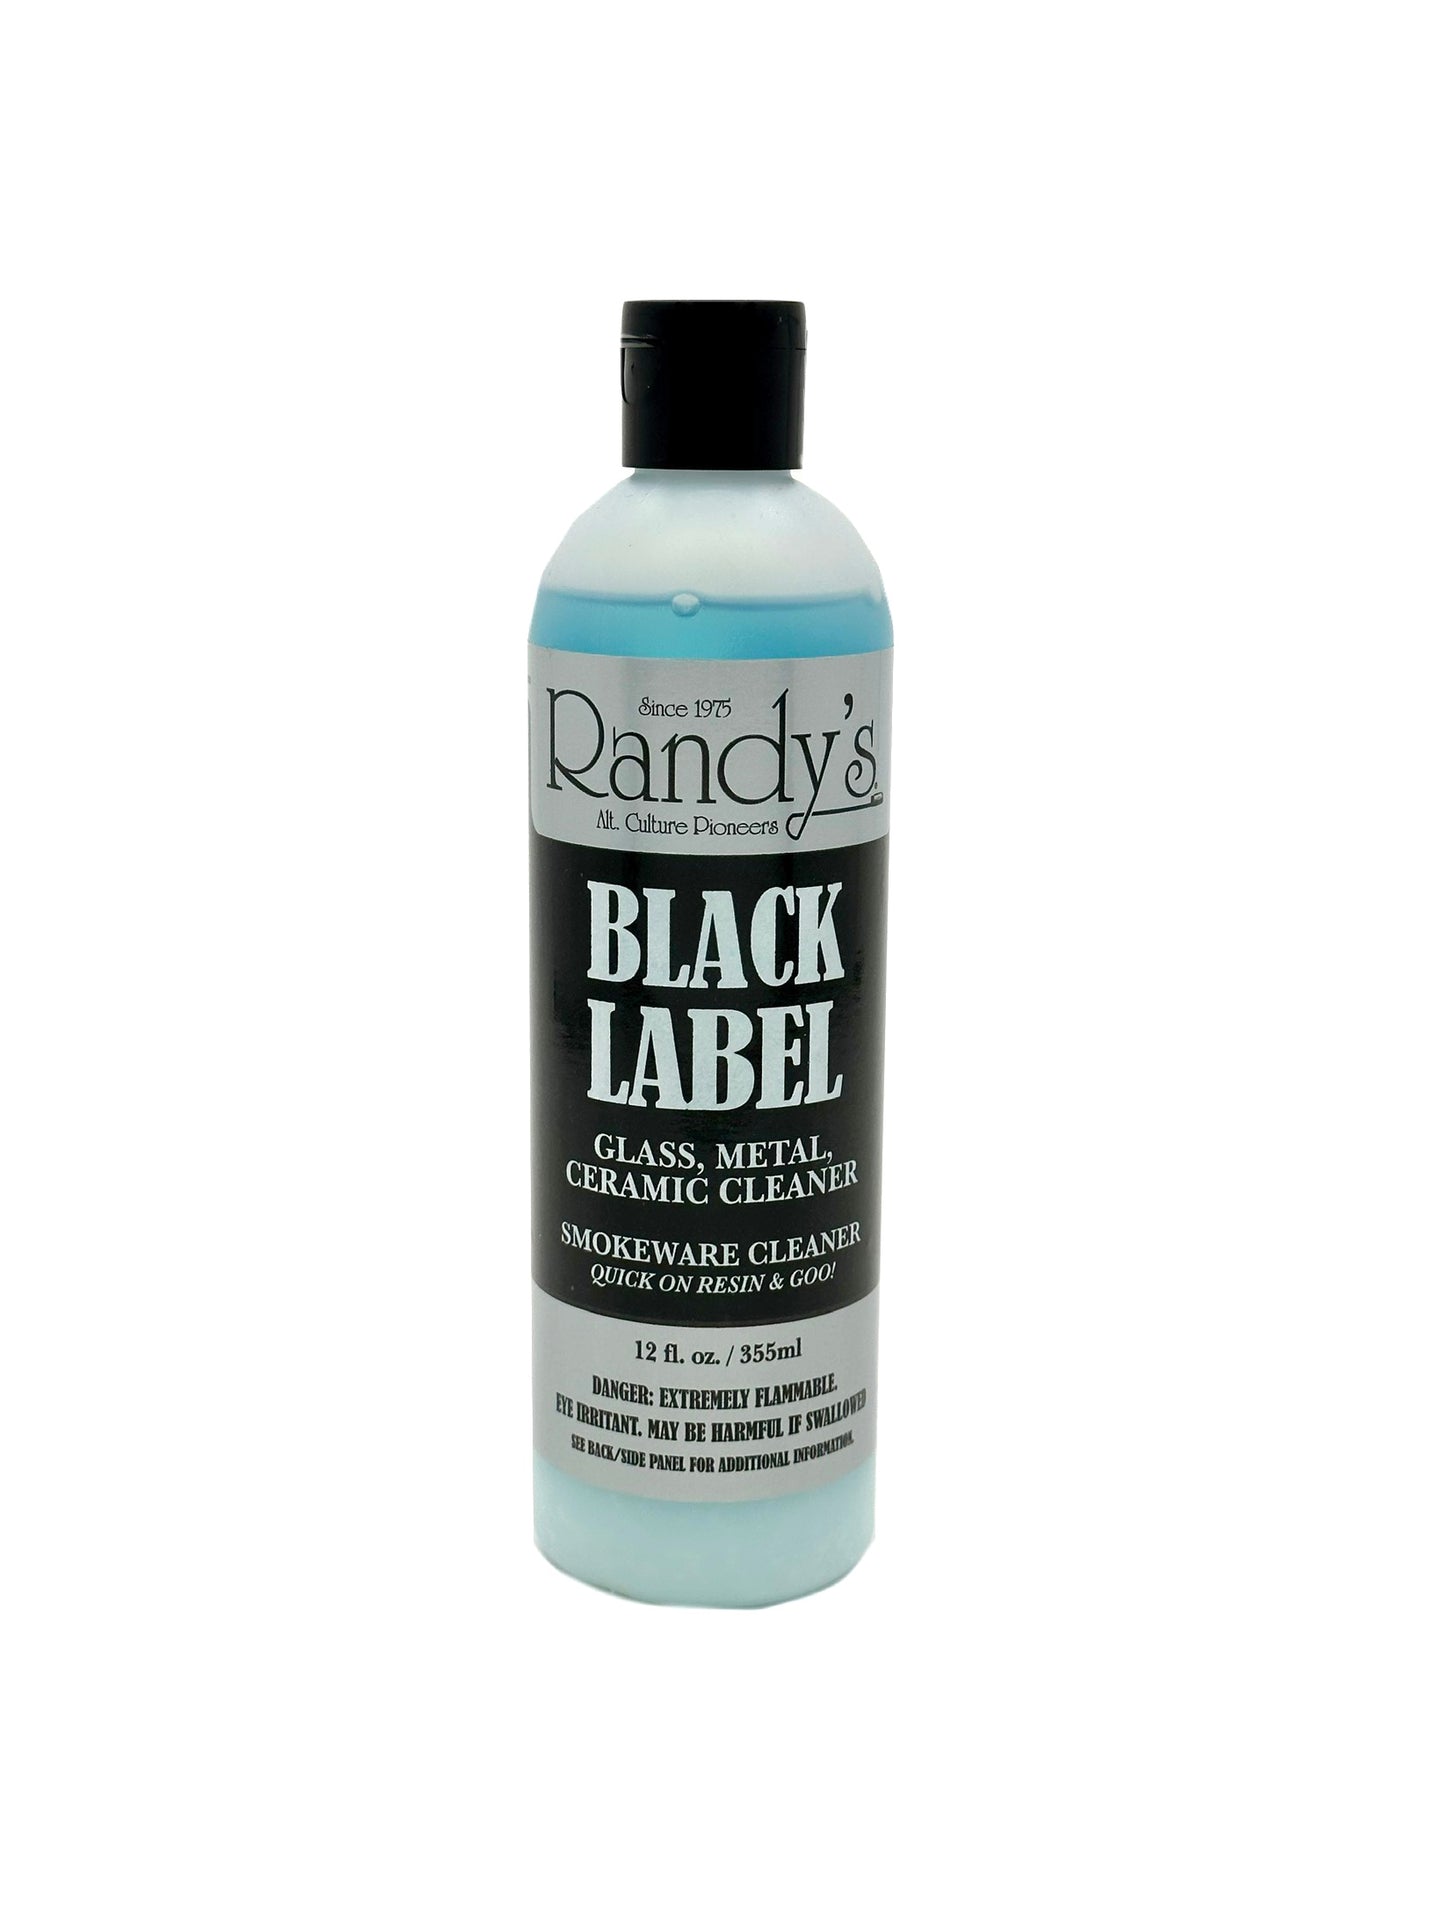 (16 unidades) Limpiador de etiquetas negras Randy's de 12 oz $4.5 c/u